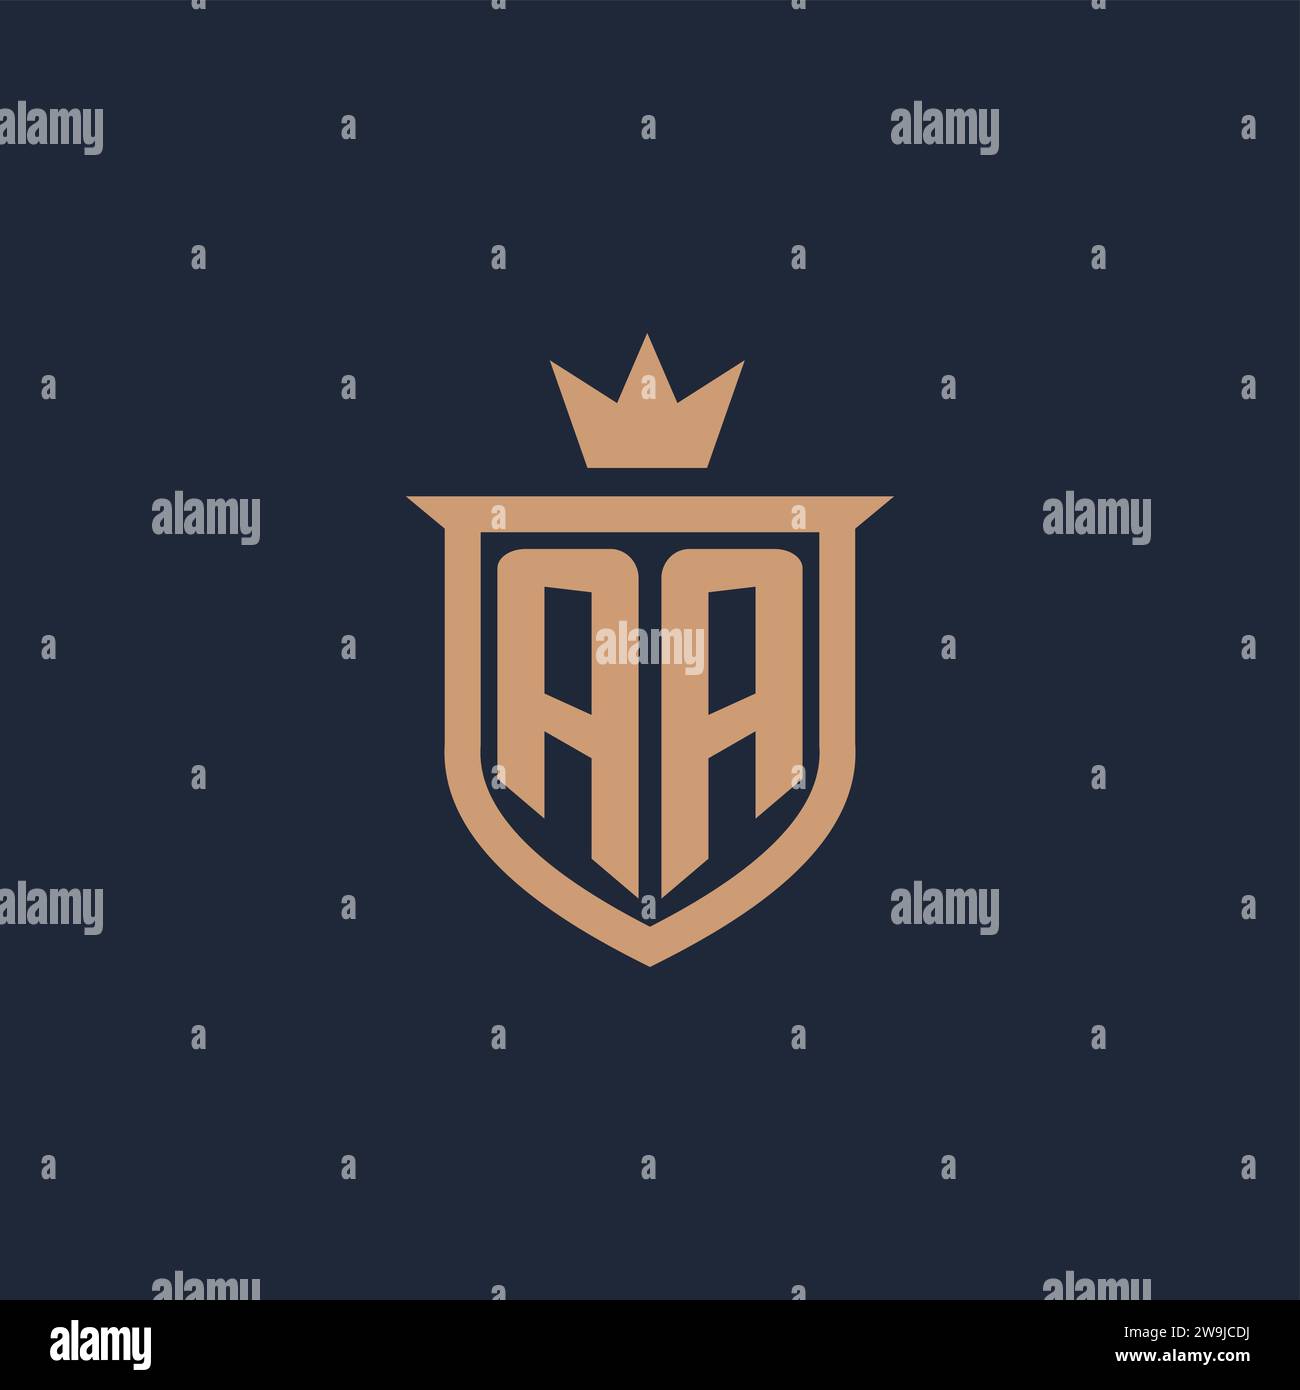 Aa logo monogram shield shape with crown design Vector Image